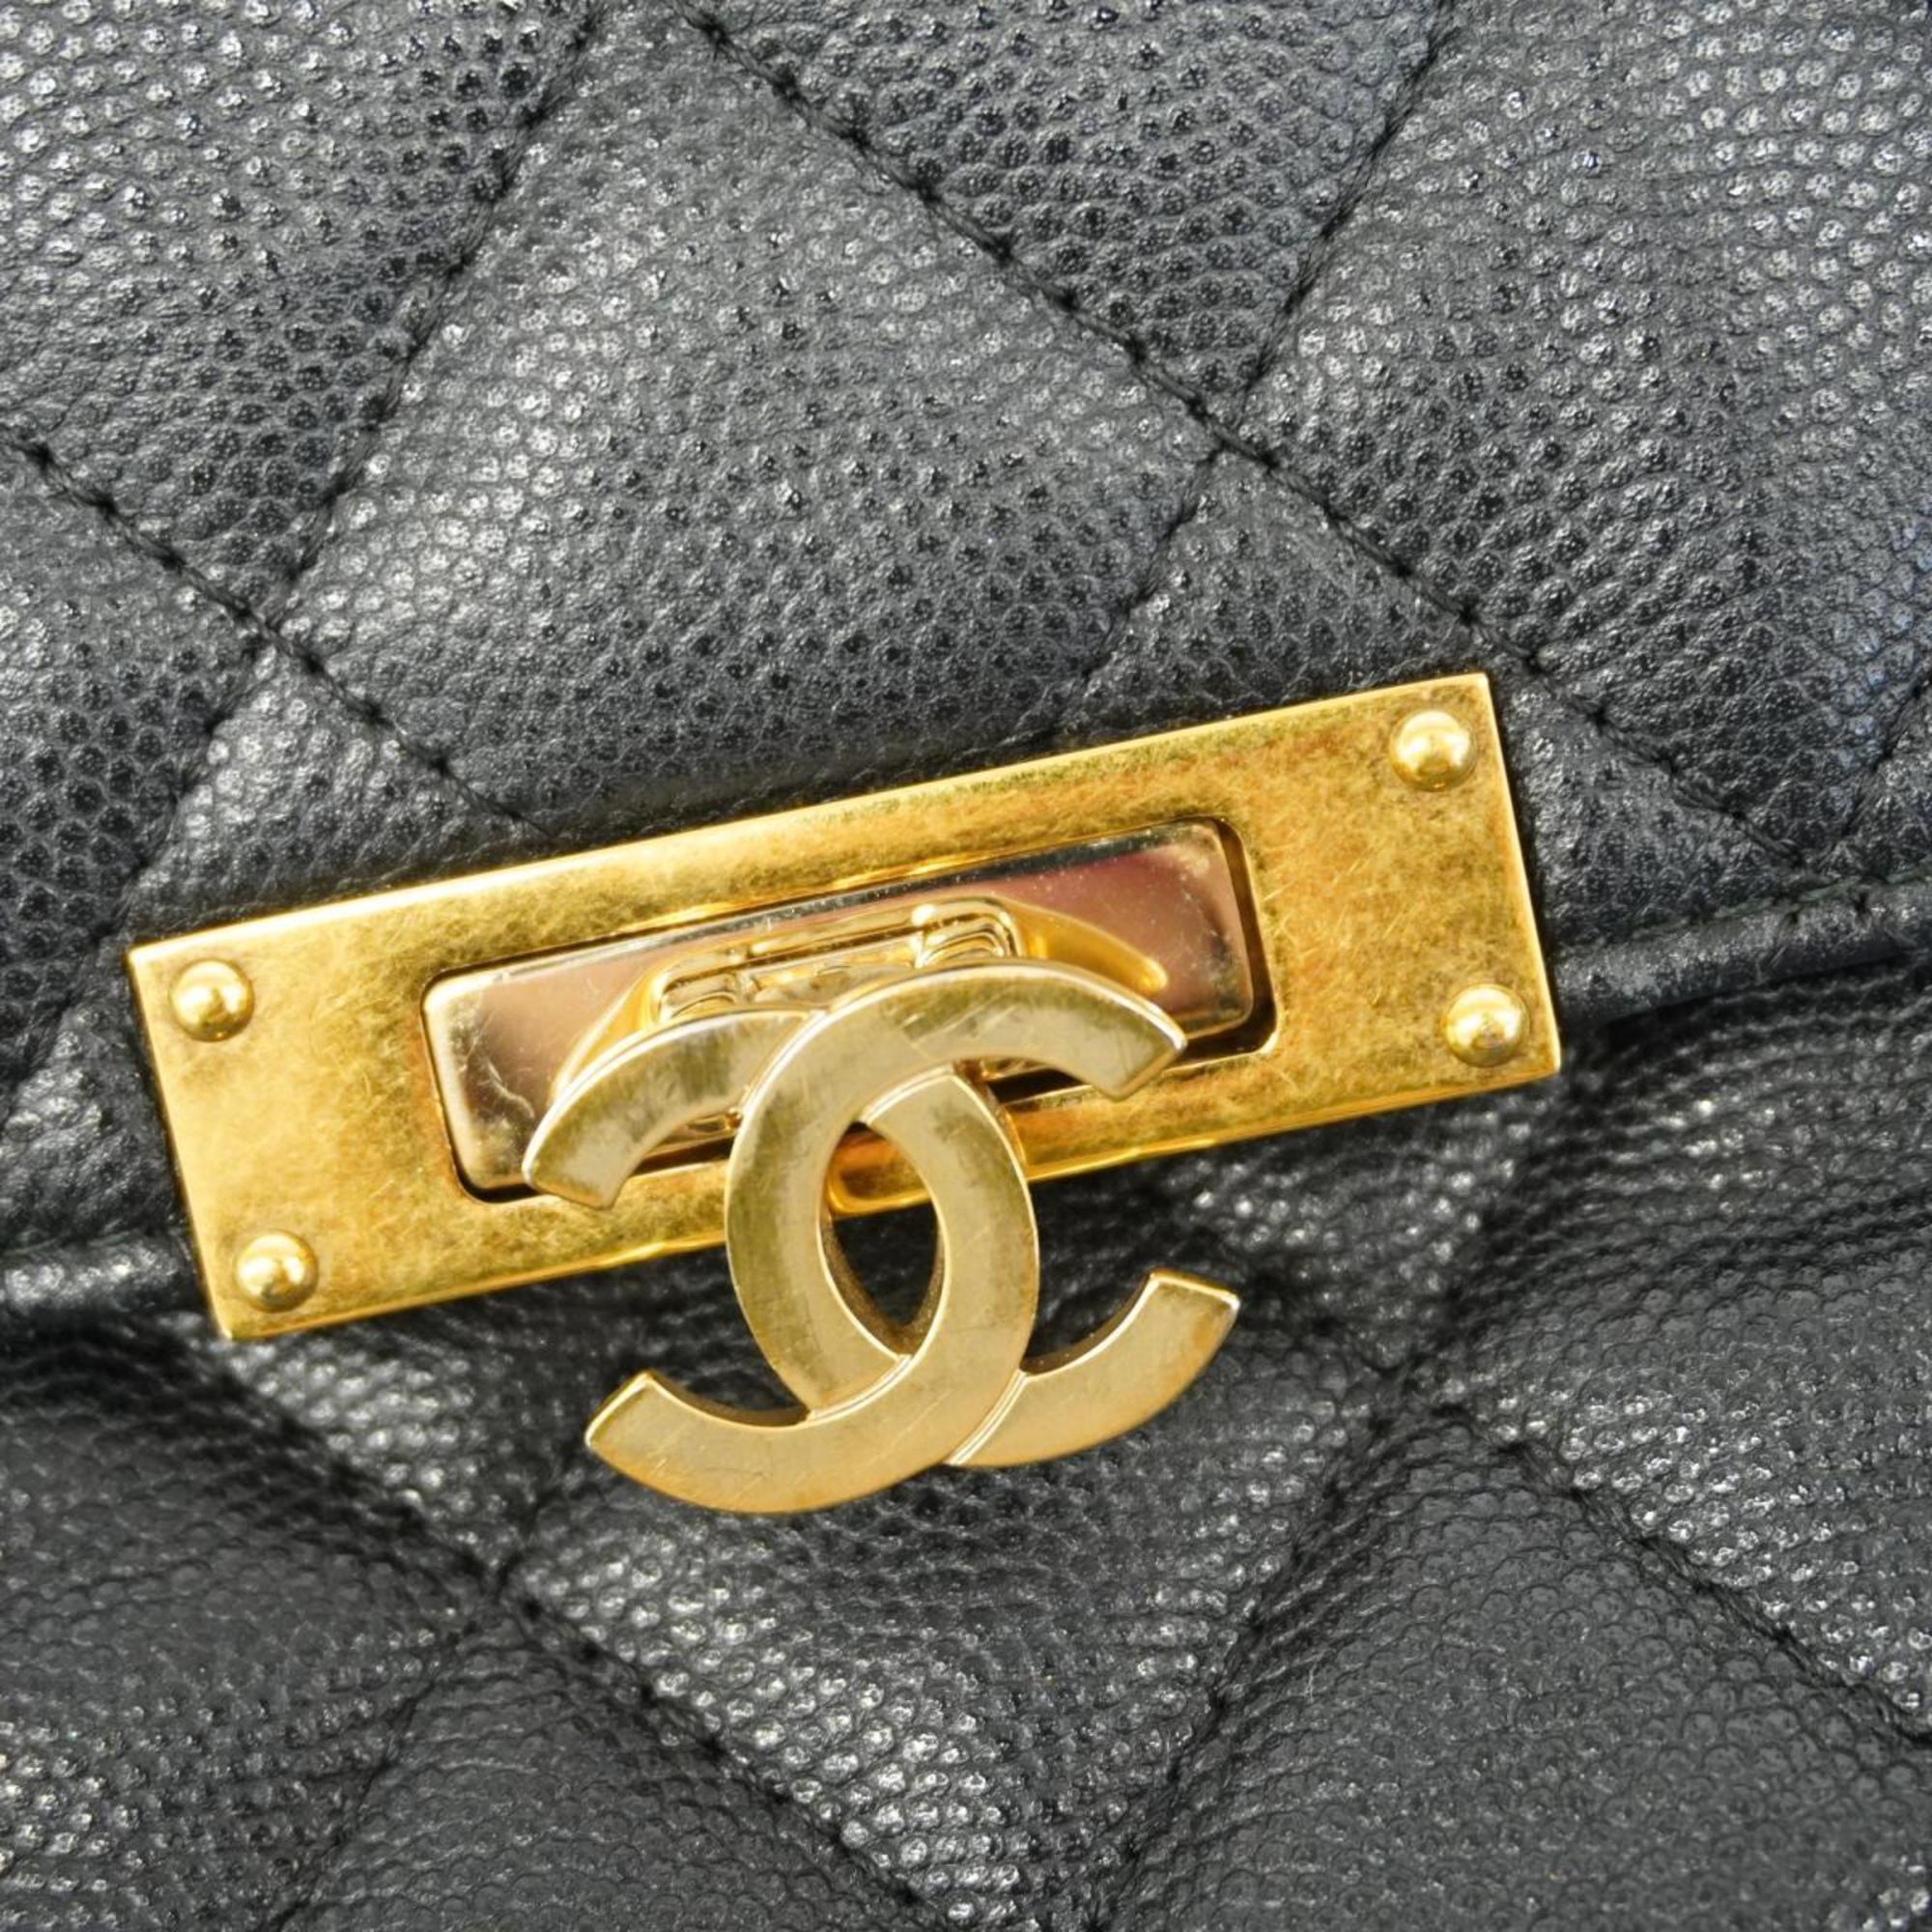 Chanel Clutch Bag Matelasse Caviar Skin Black Women's